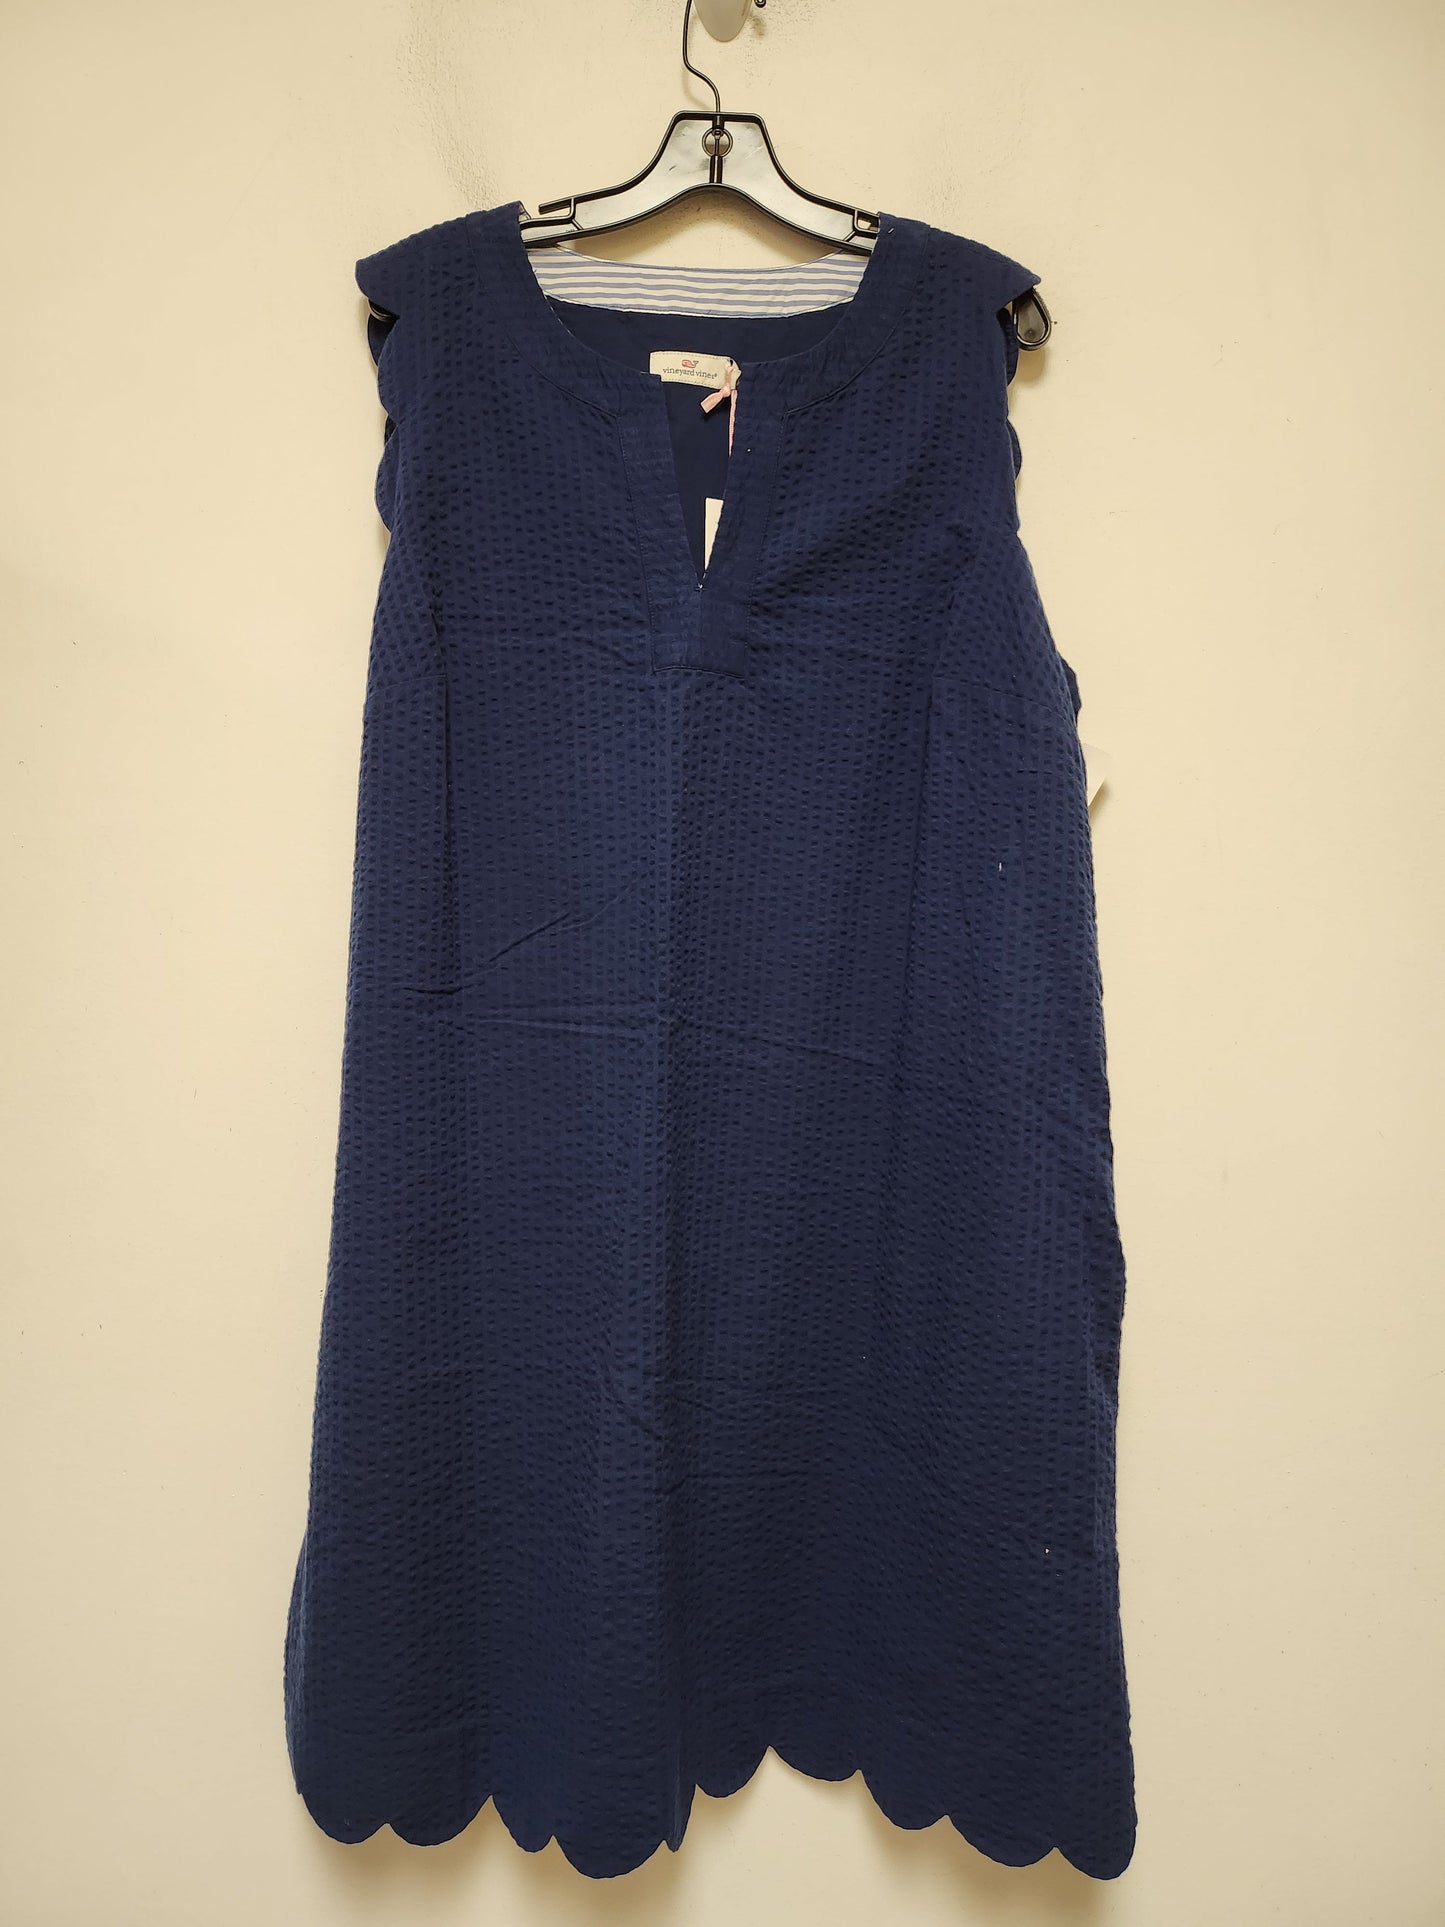 Blue Dress Casual Short Vineyard Vines, Size 2x